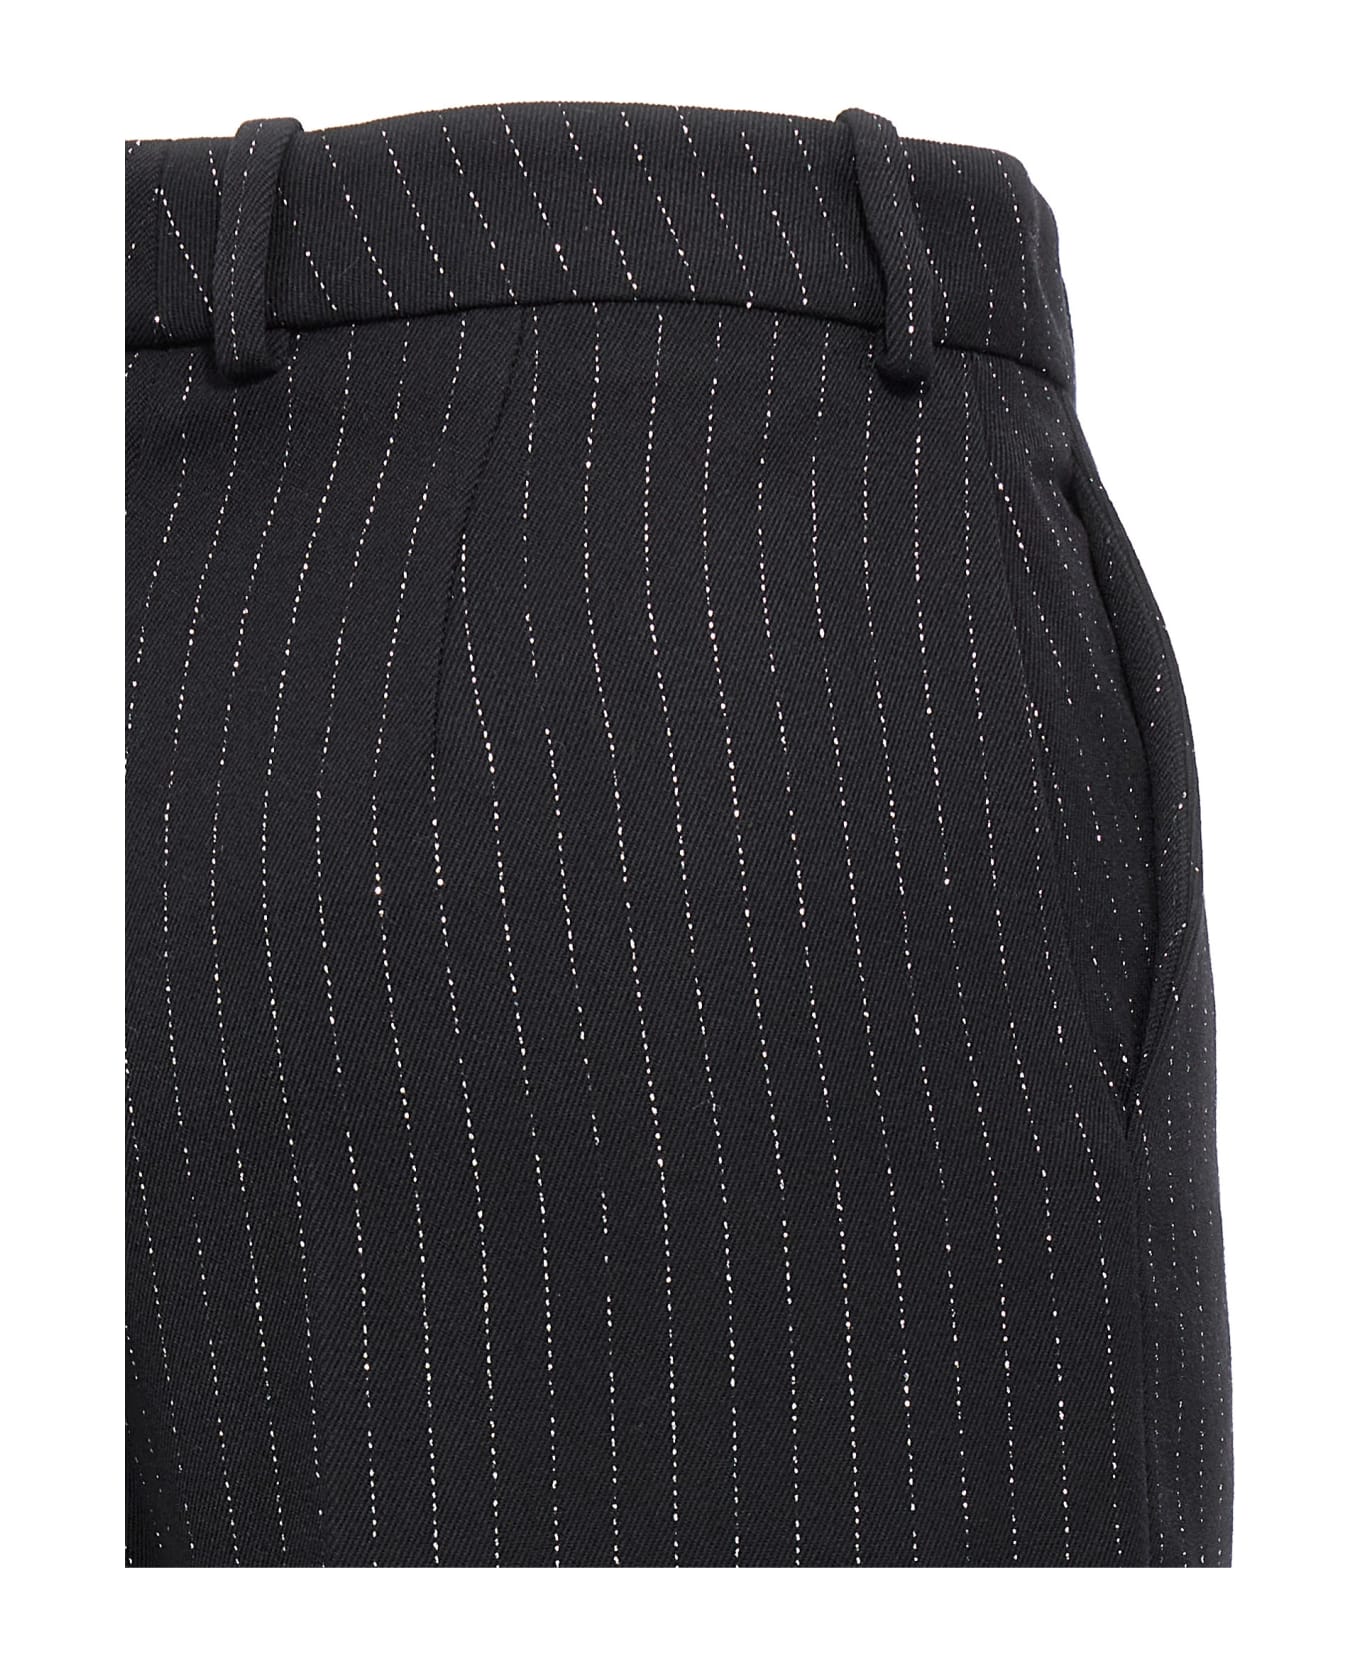 Balmain Black Lurex Striped Flare Trousers - Nero ボトムス